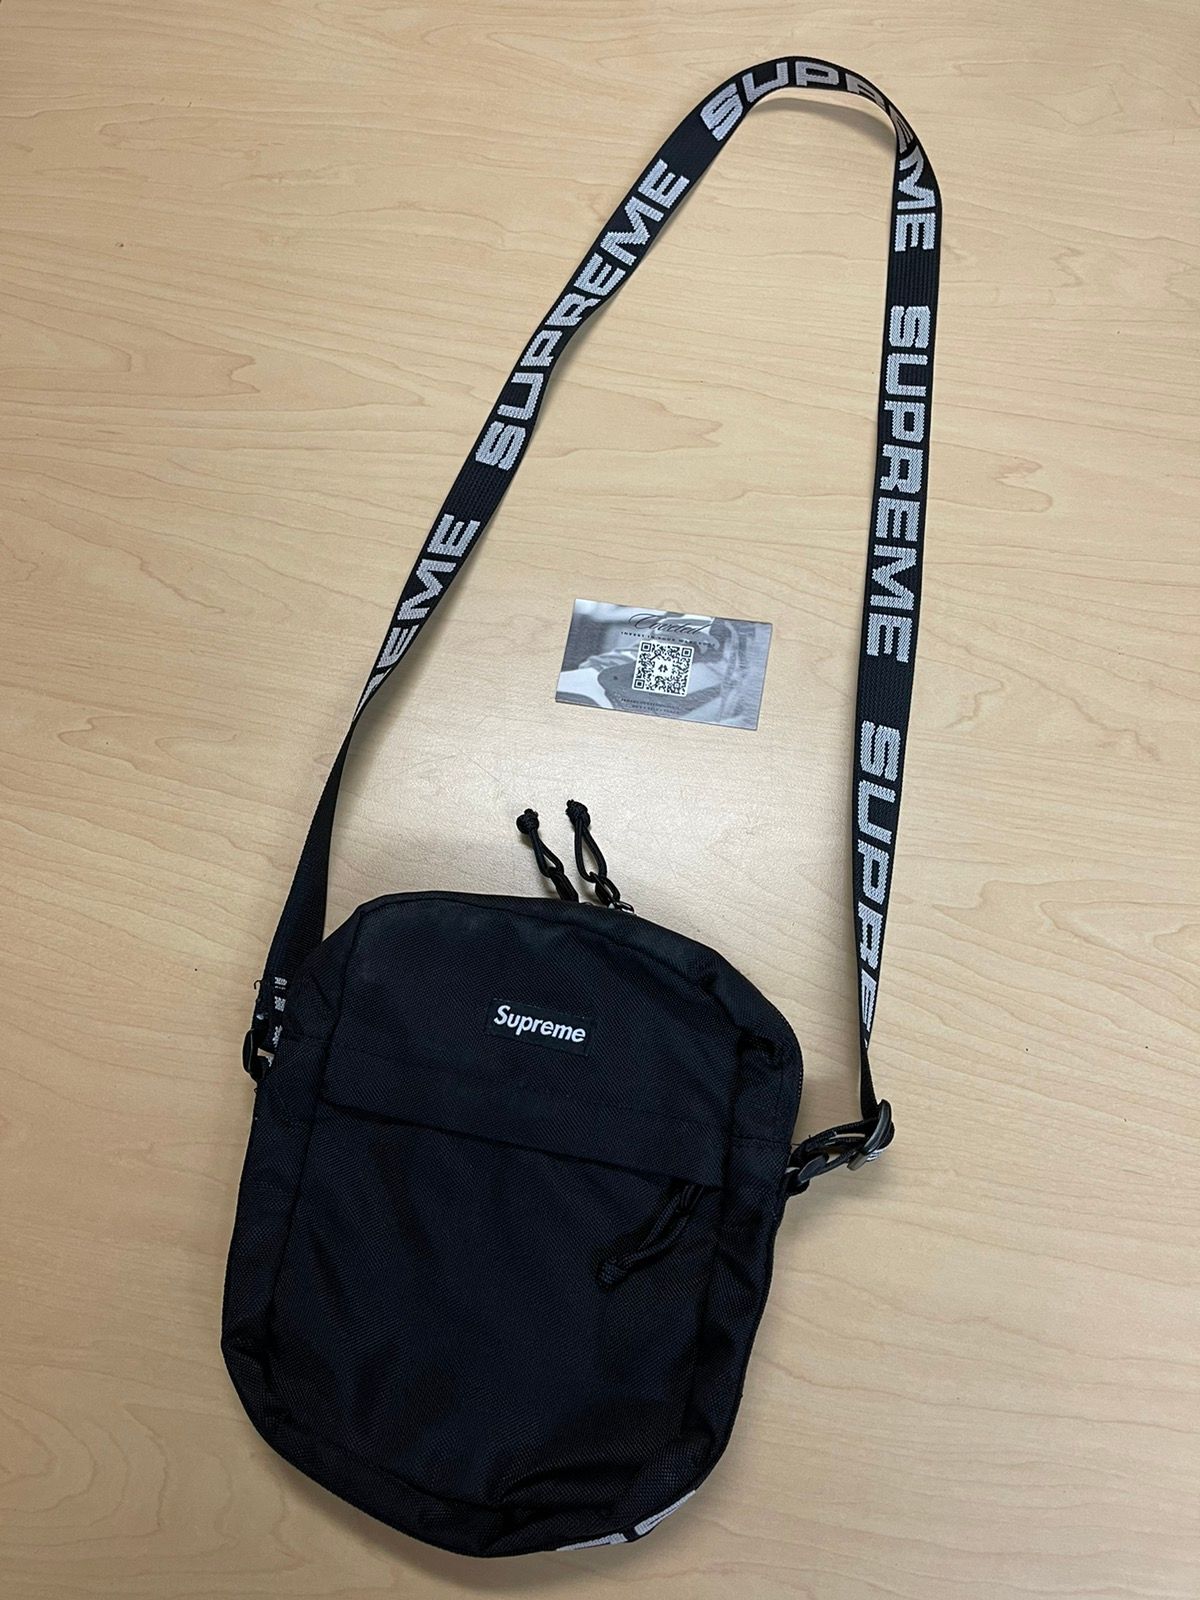 Brand New Supreme SS18 Shoulder Bag - Black Cordura Fabric With Tags